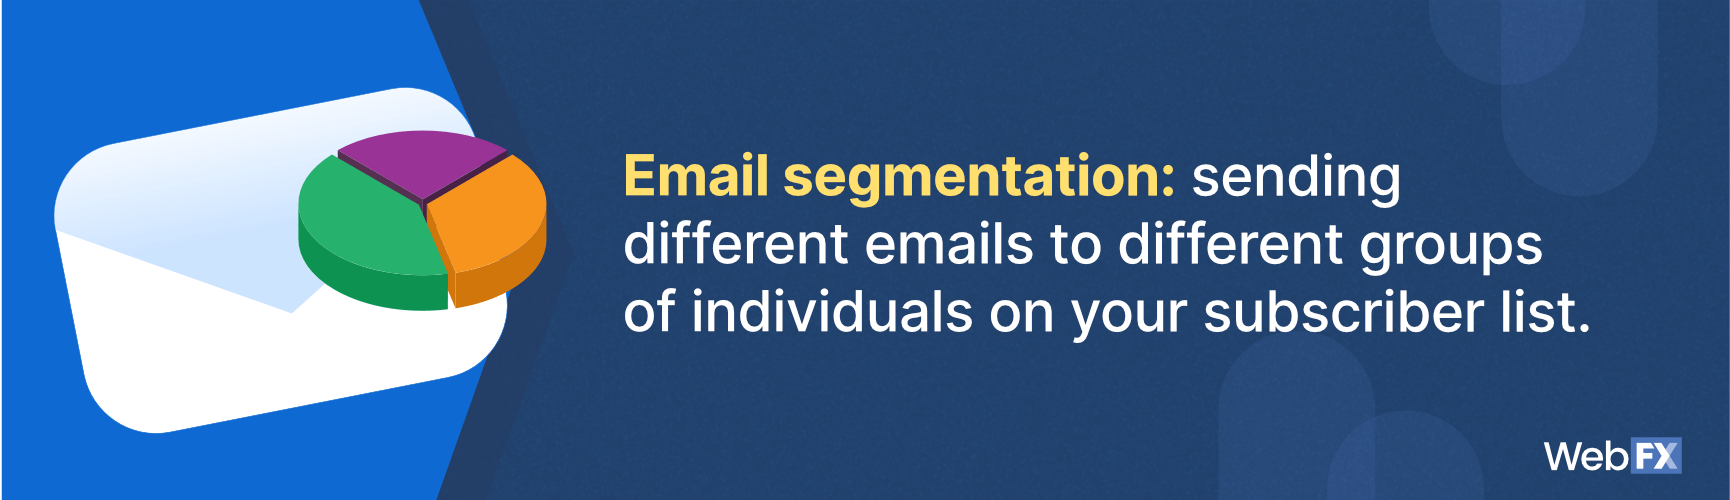 Email segmentation definition